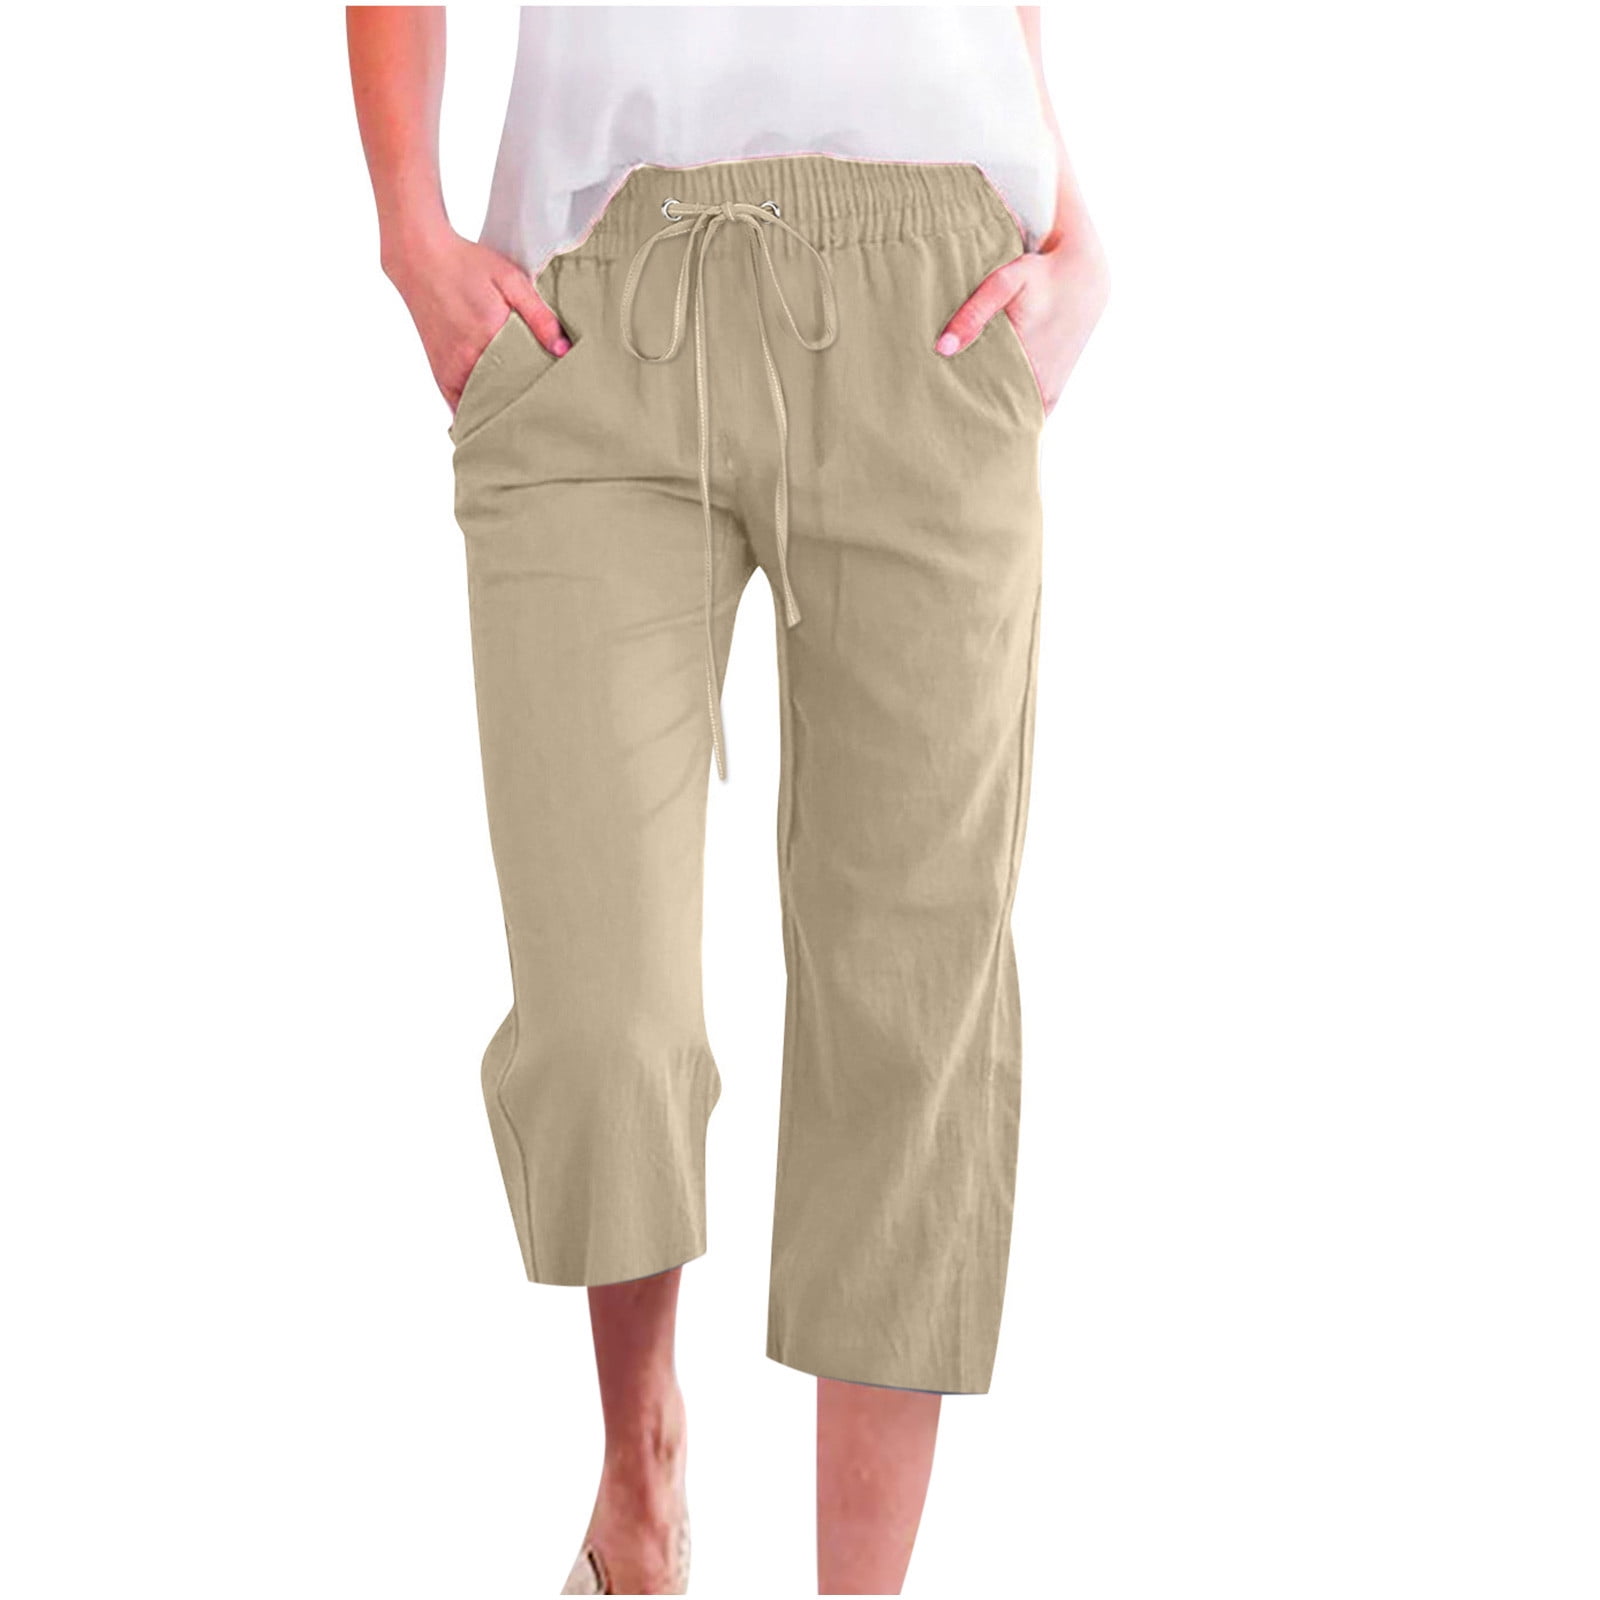 Womens Pull On Crop Capri Pants Cotton Linen Capris Casual Drawstring ...